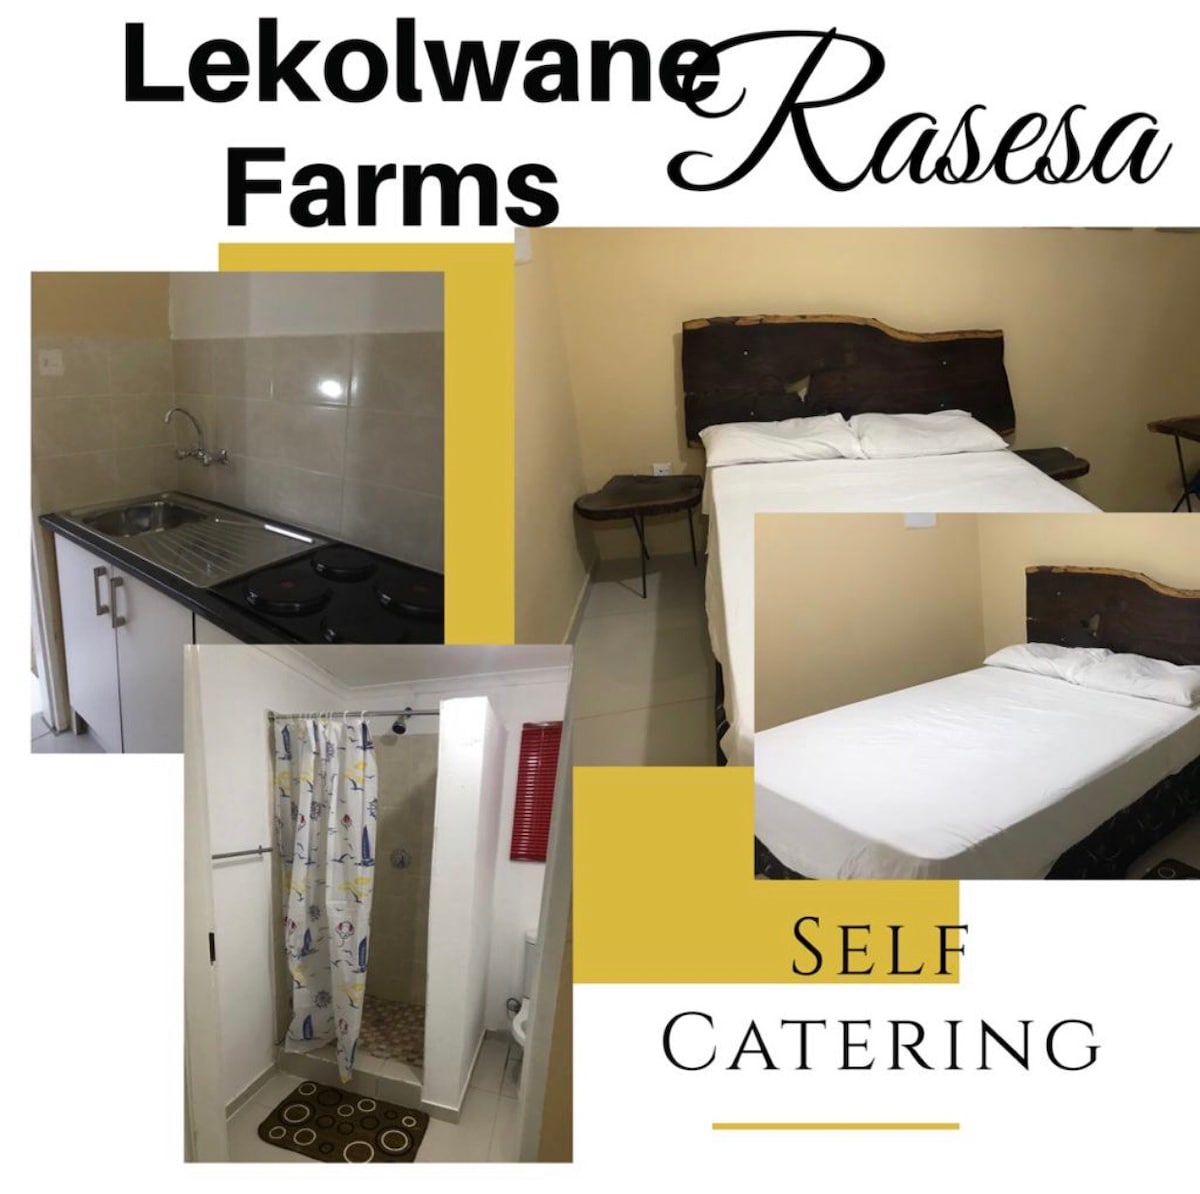 Lekolwane Farms Rasesa self catering